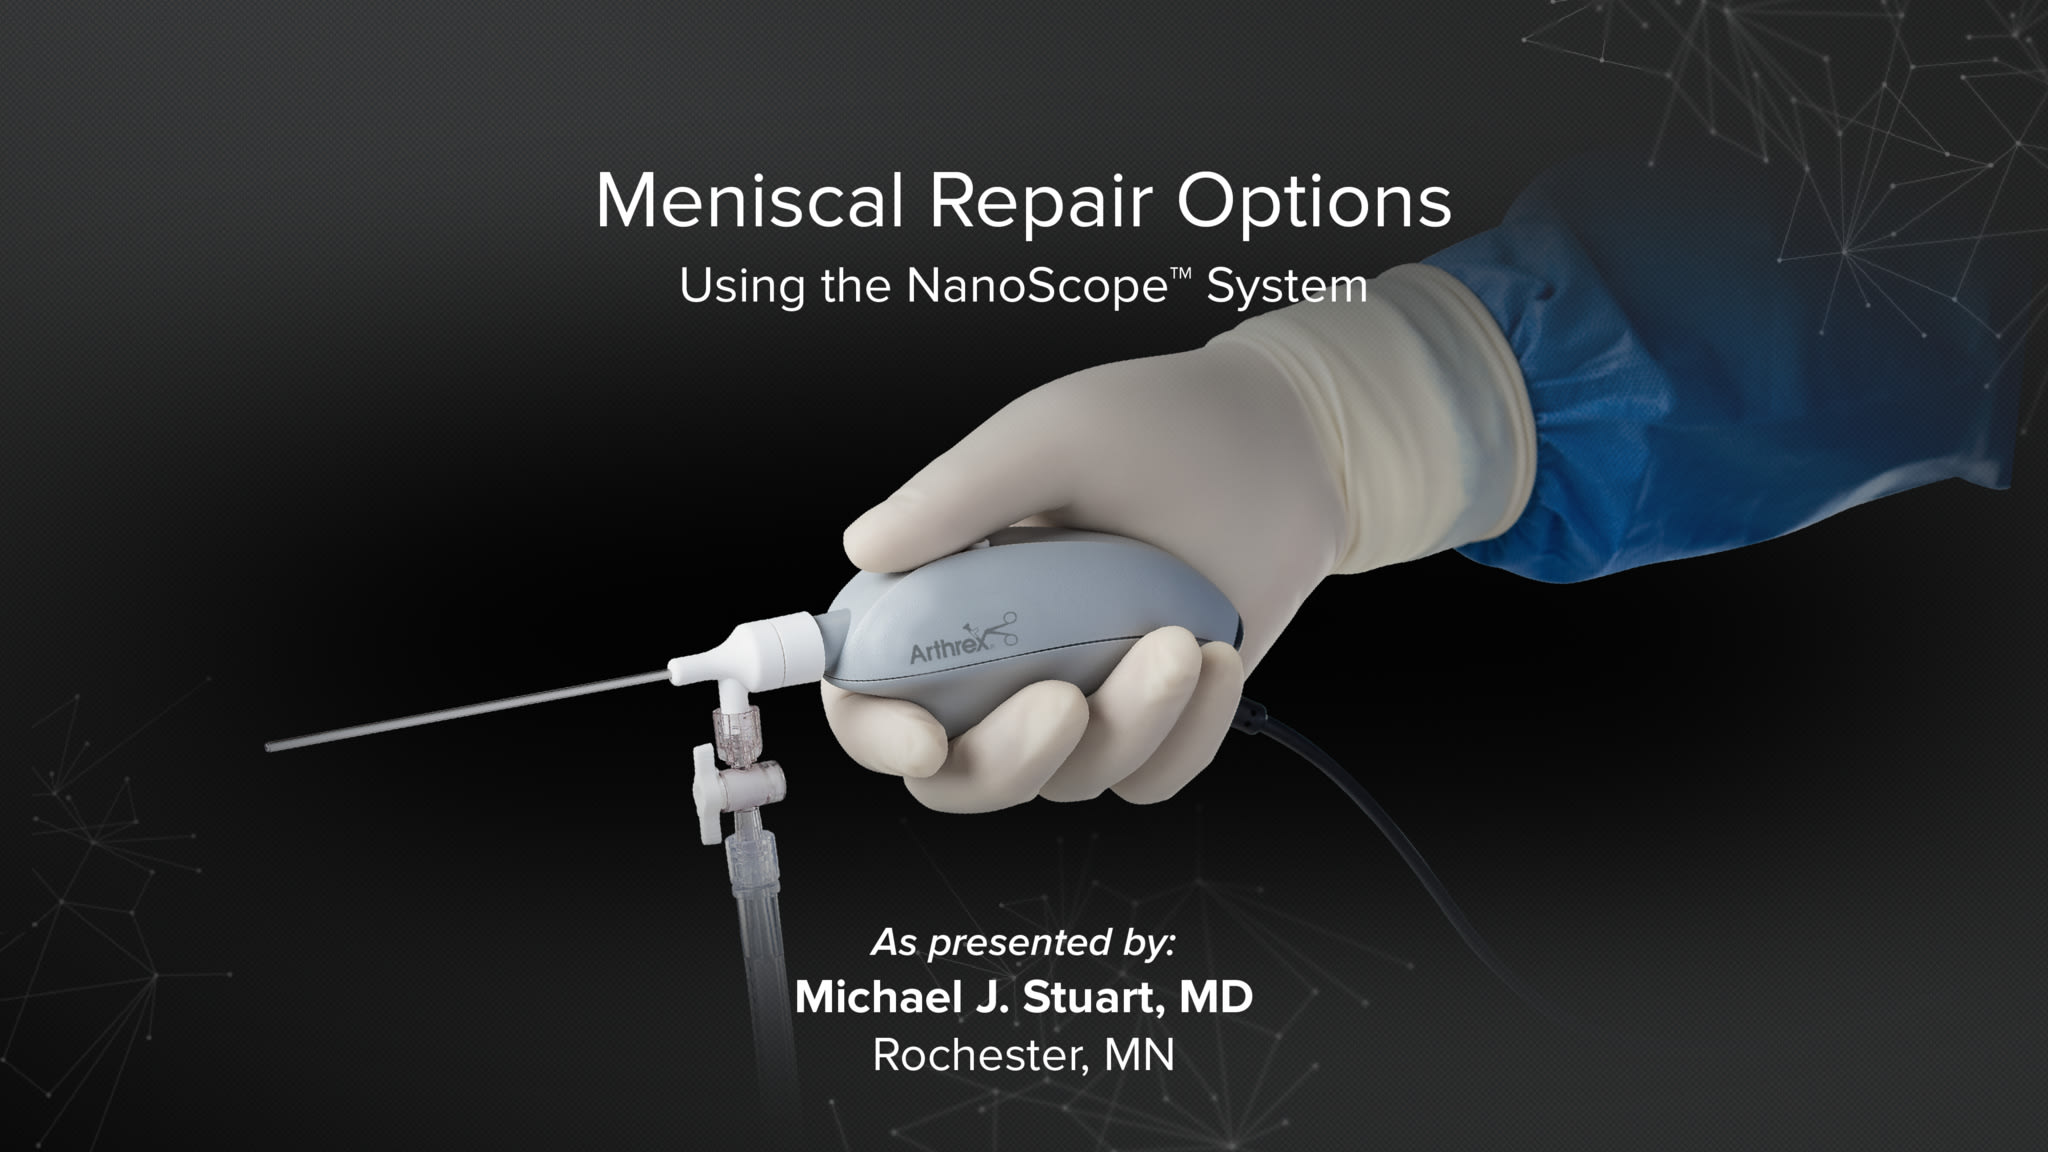 Meniscal Repair Options Using the NanoScope™ System Presented by Dr. Michael J. Stuart at TPC